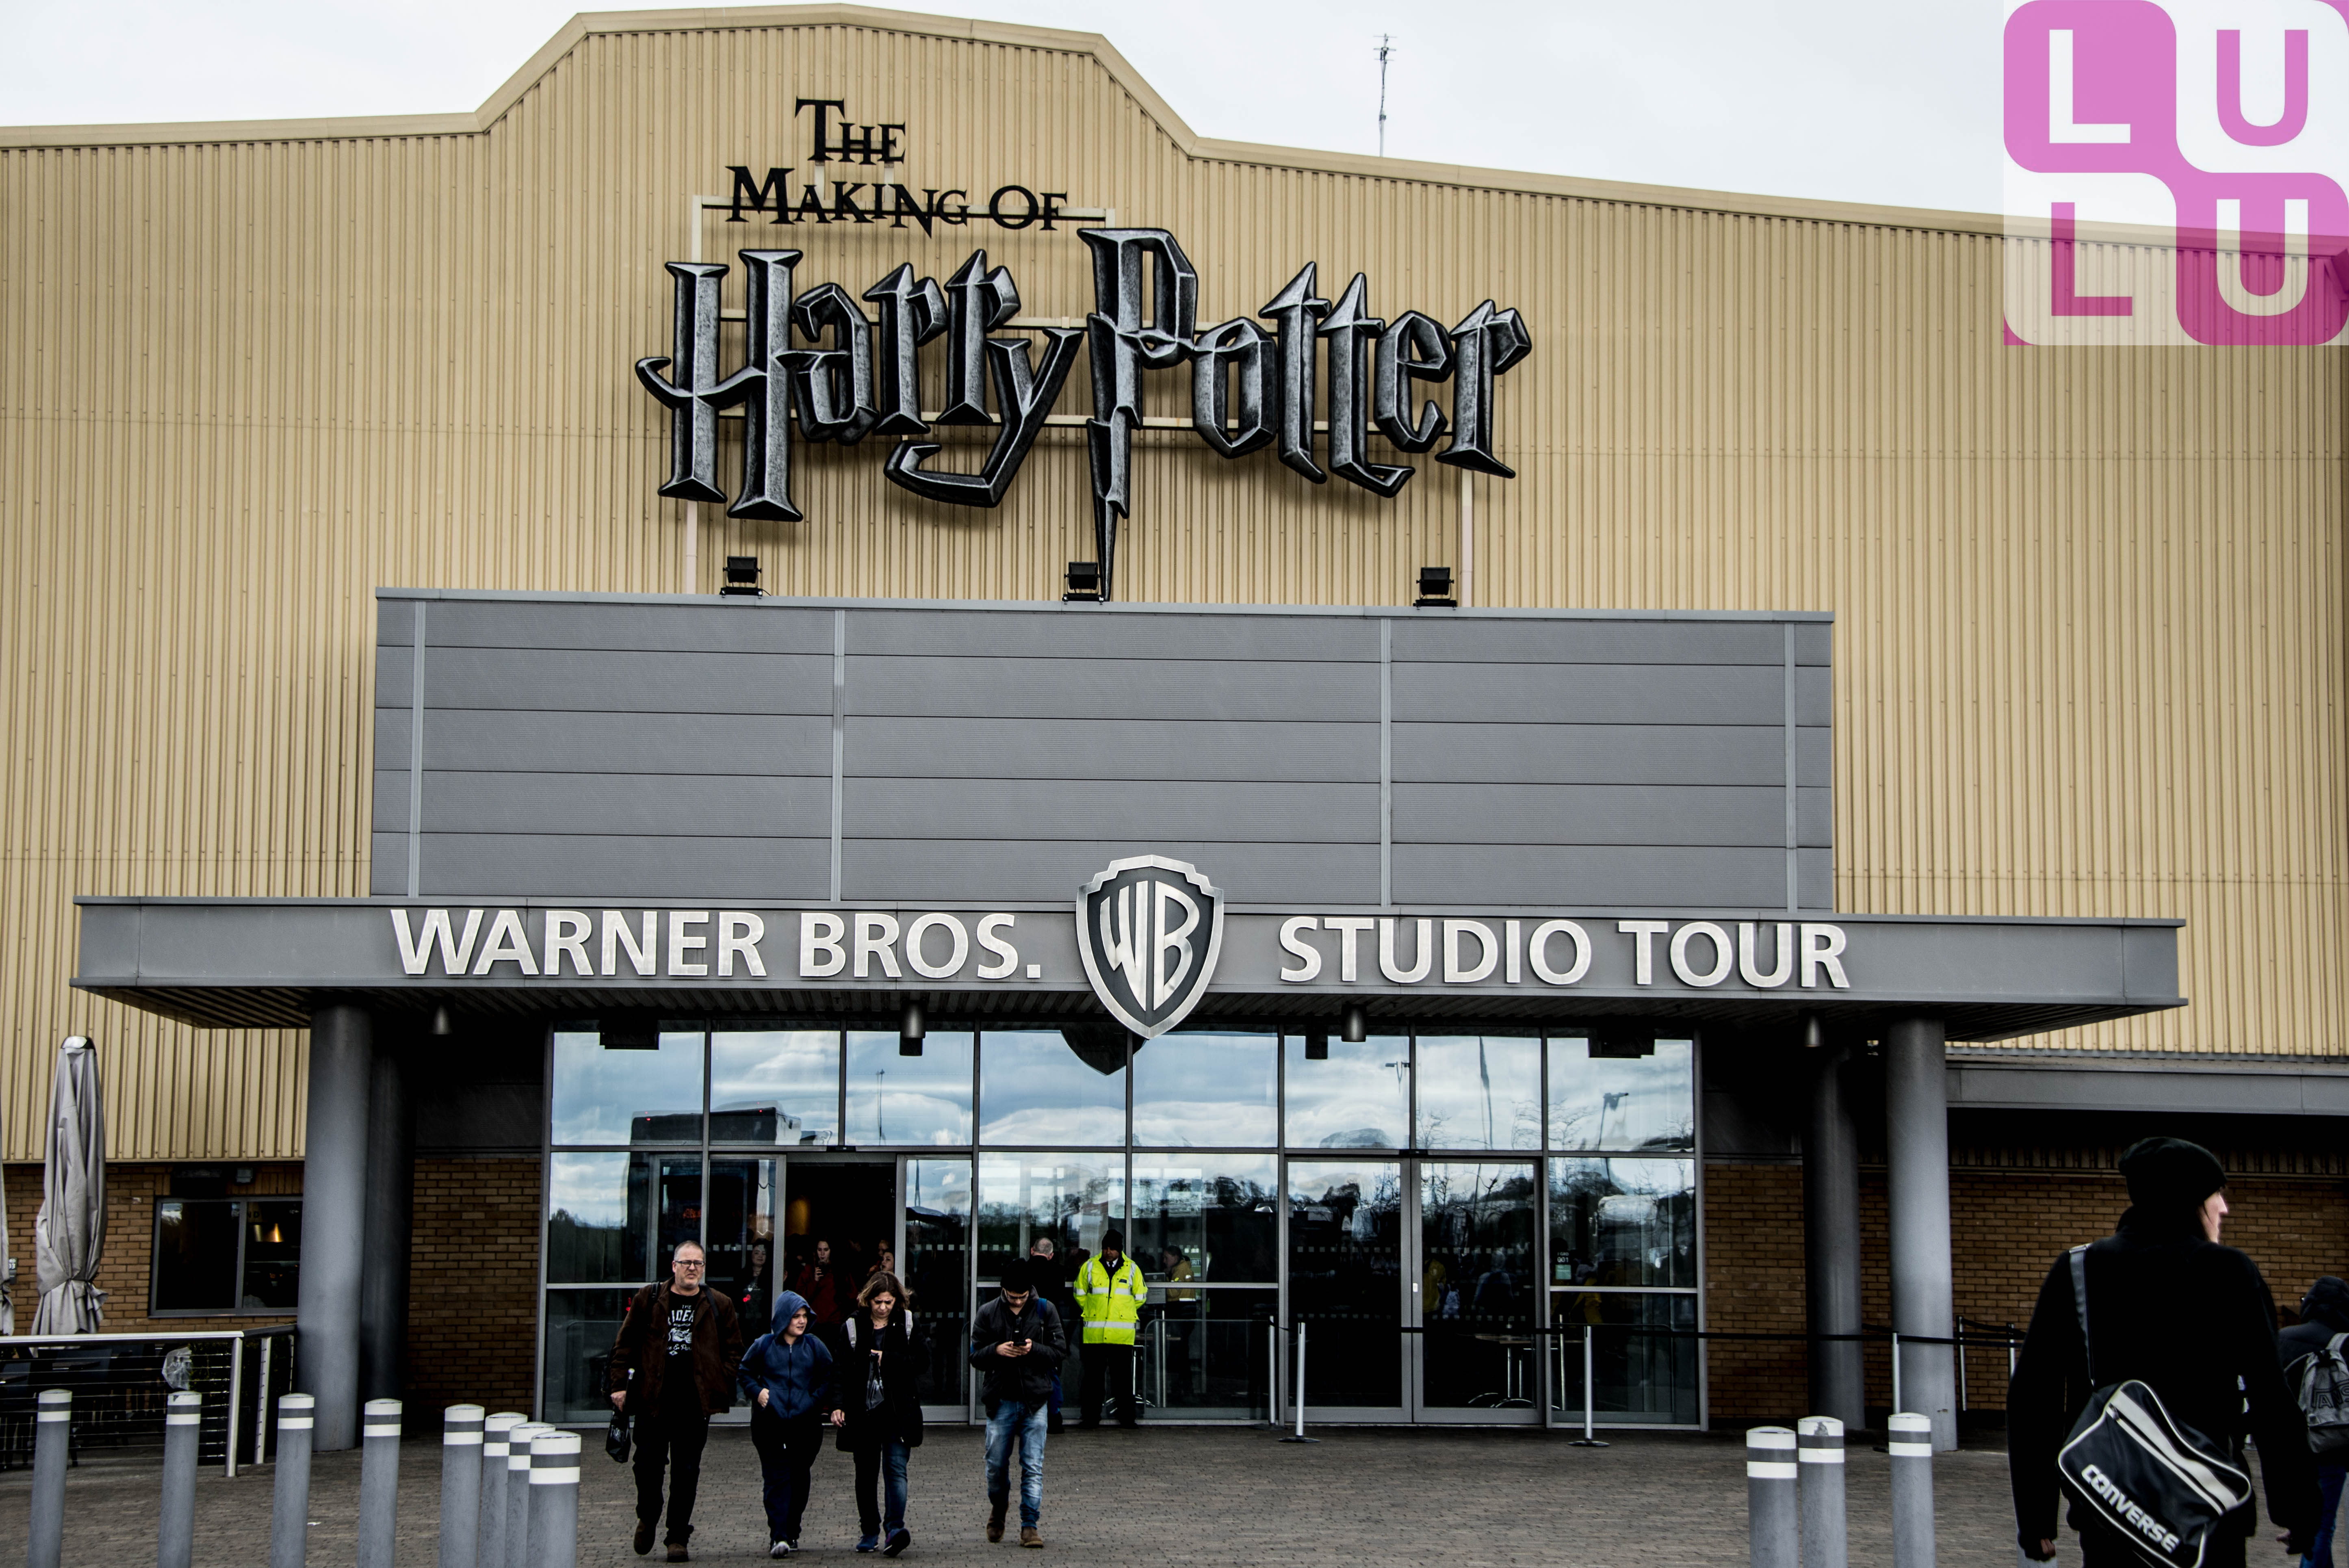 Warner Bros Studio Tour London